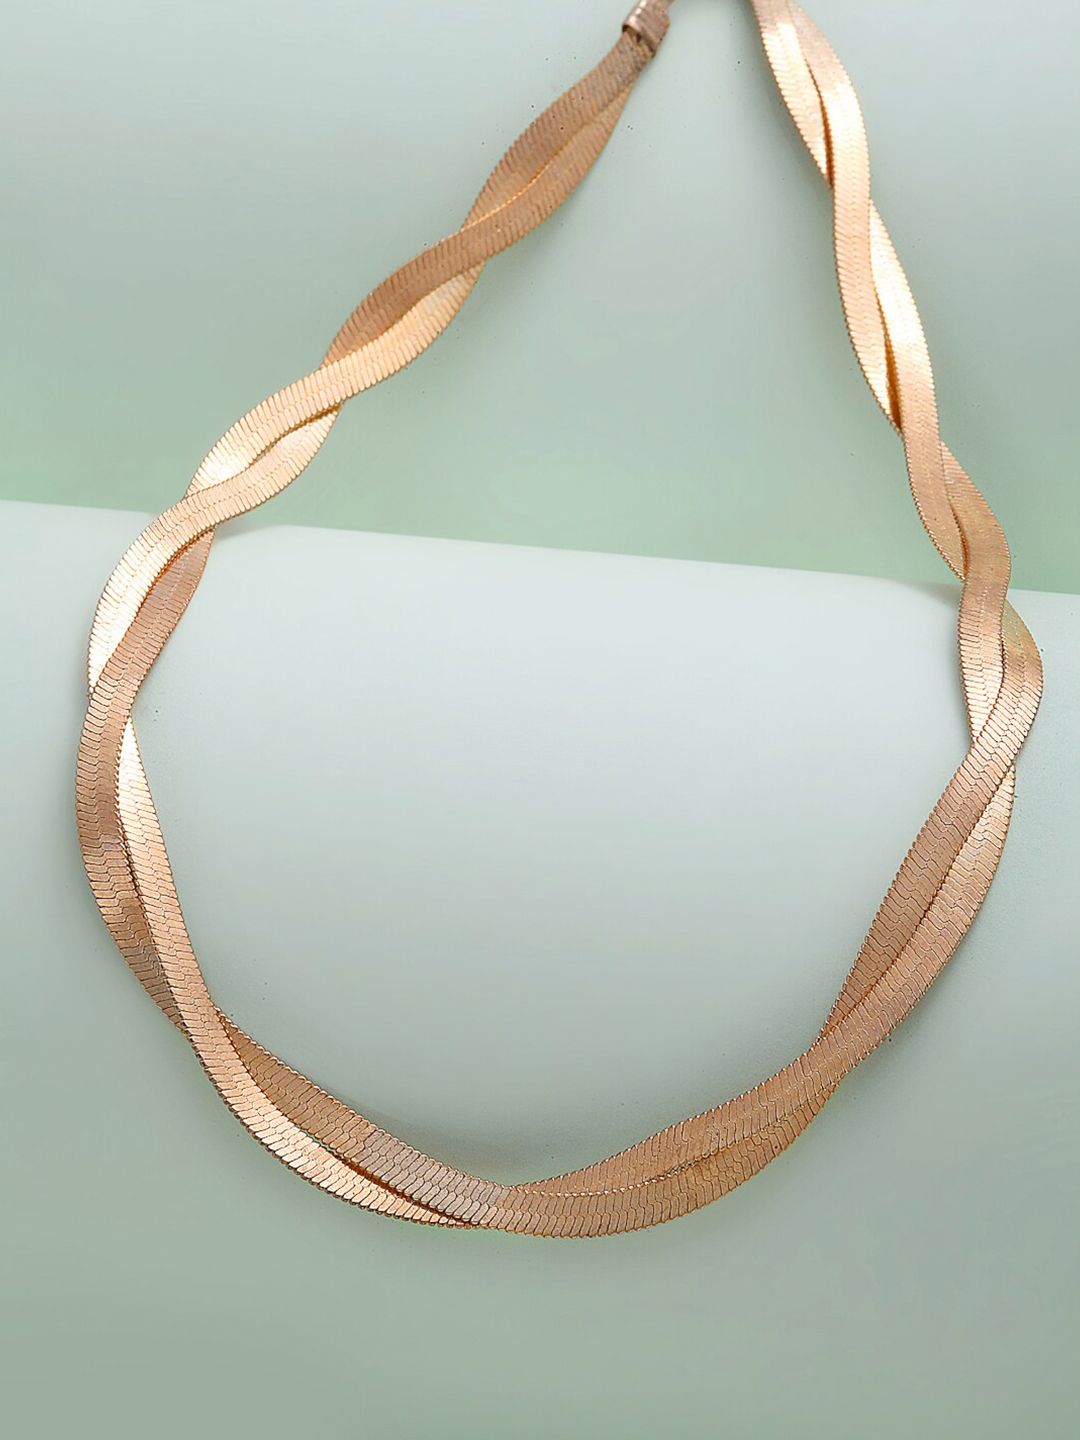 Ferosh Women Gold-Toned Choker Necklace Price in India